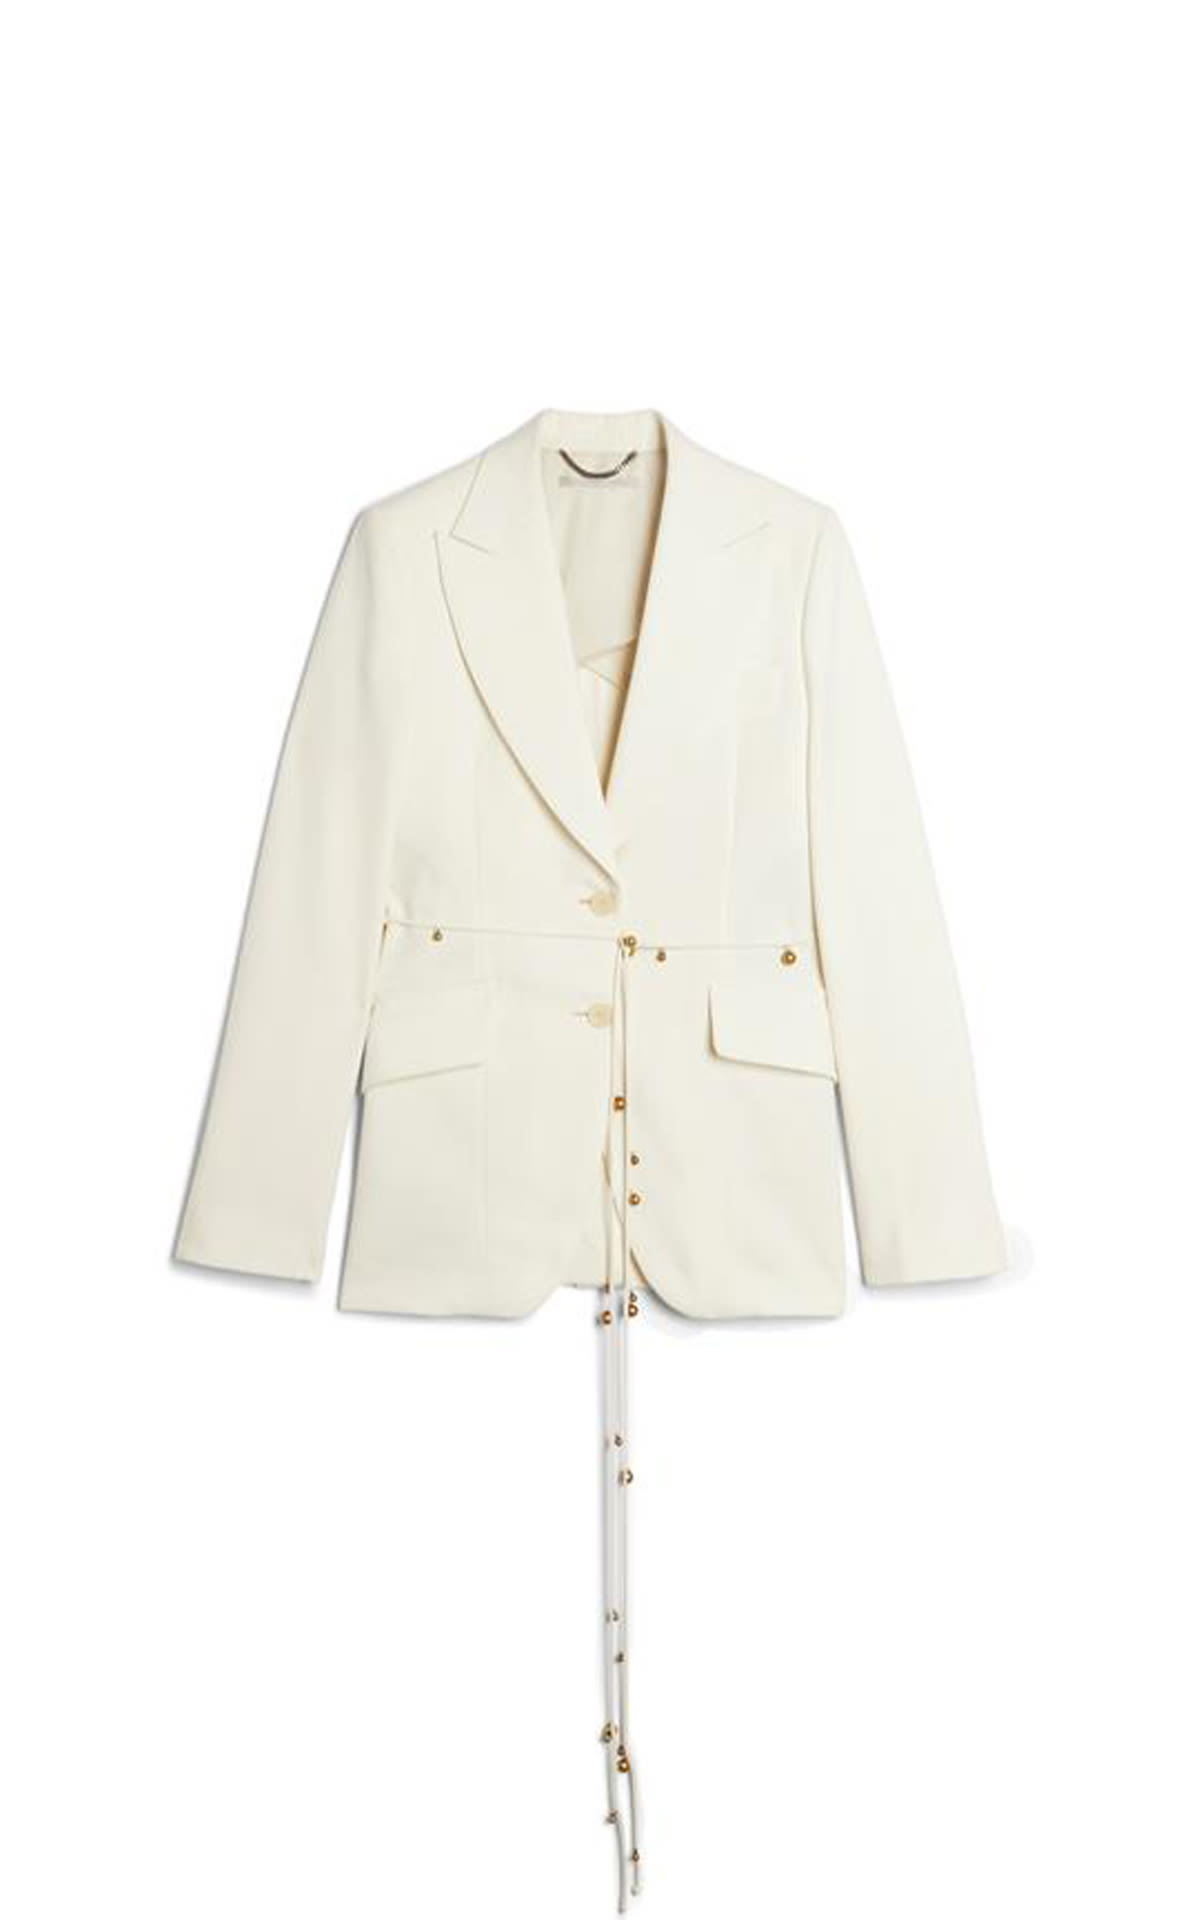 Stella McCartney Twill tailored jacket from Bicester Village